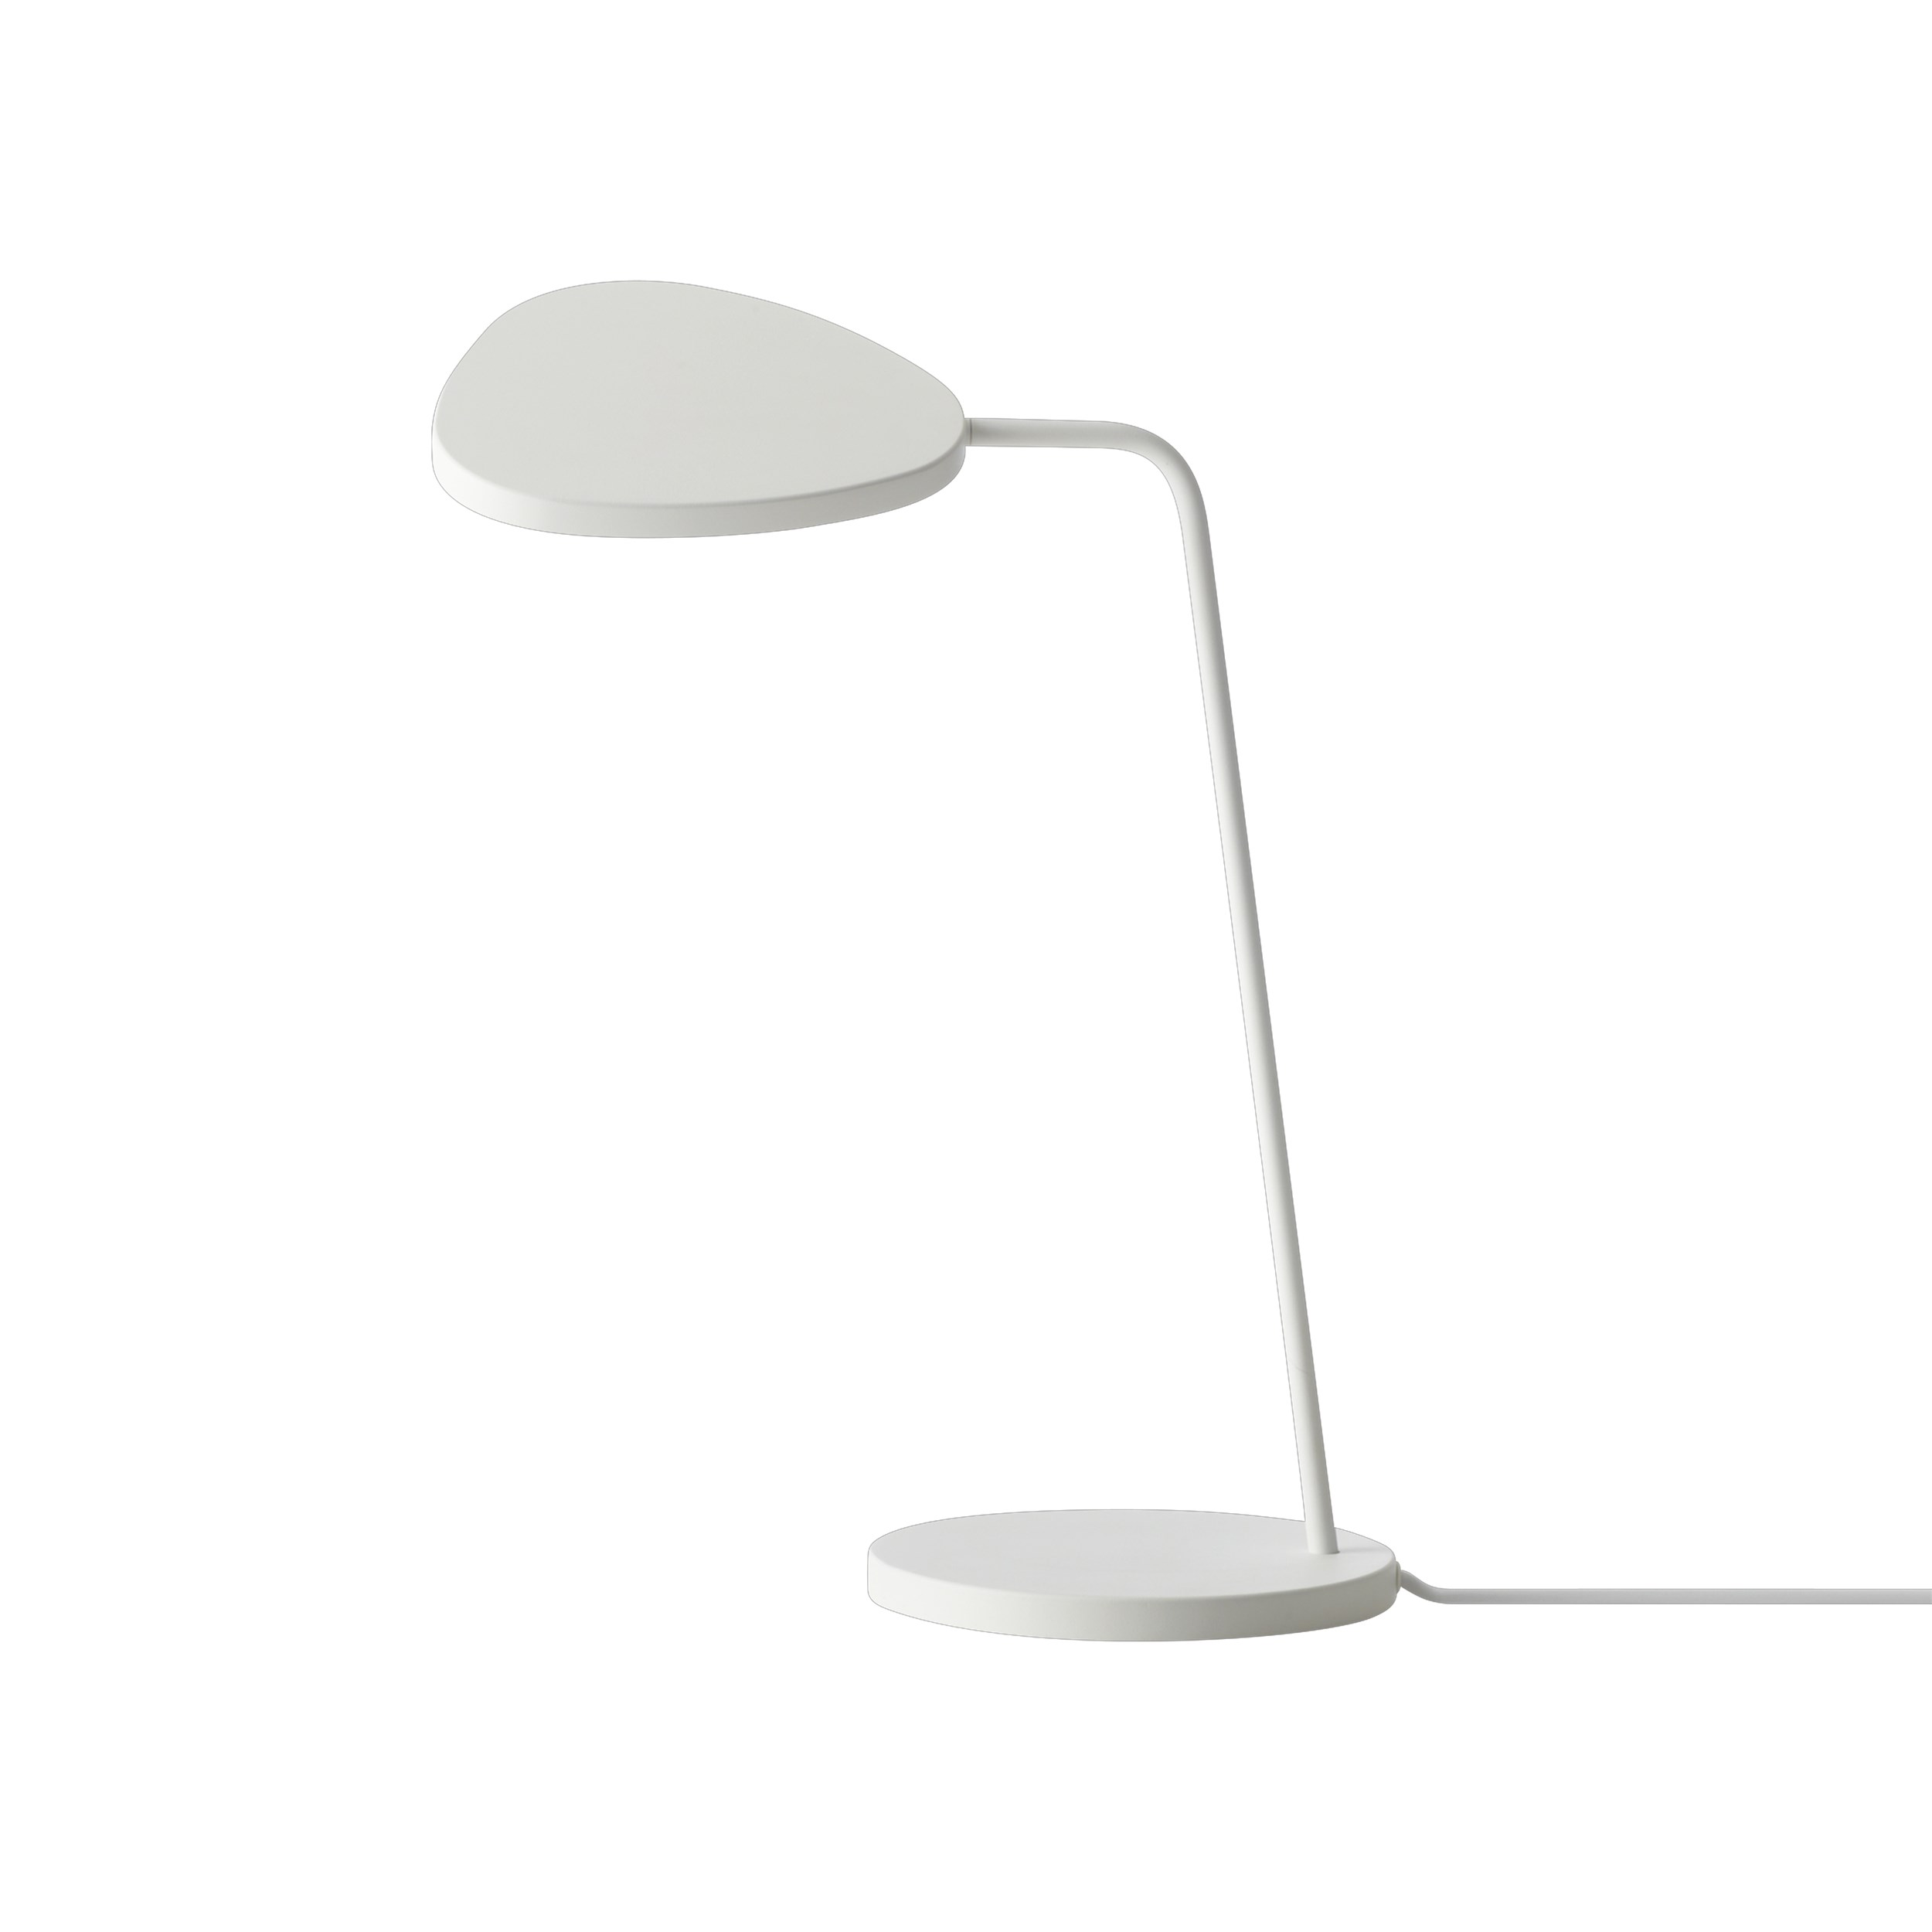 [muuto]무토 리프 테이블 화이트 Leaf Table Lamp_White